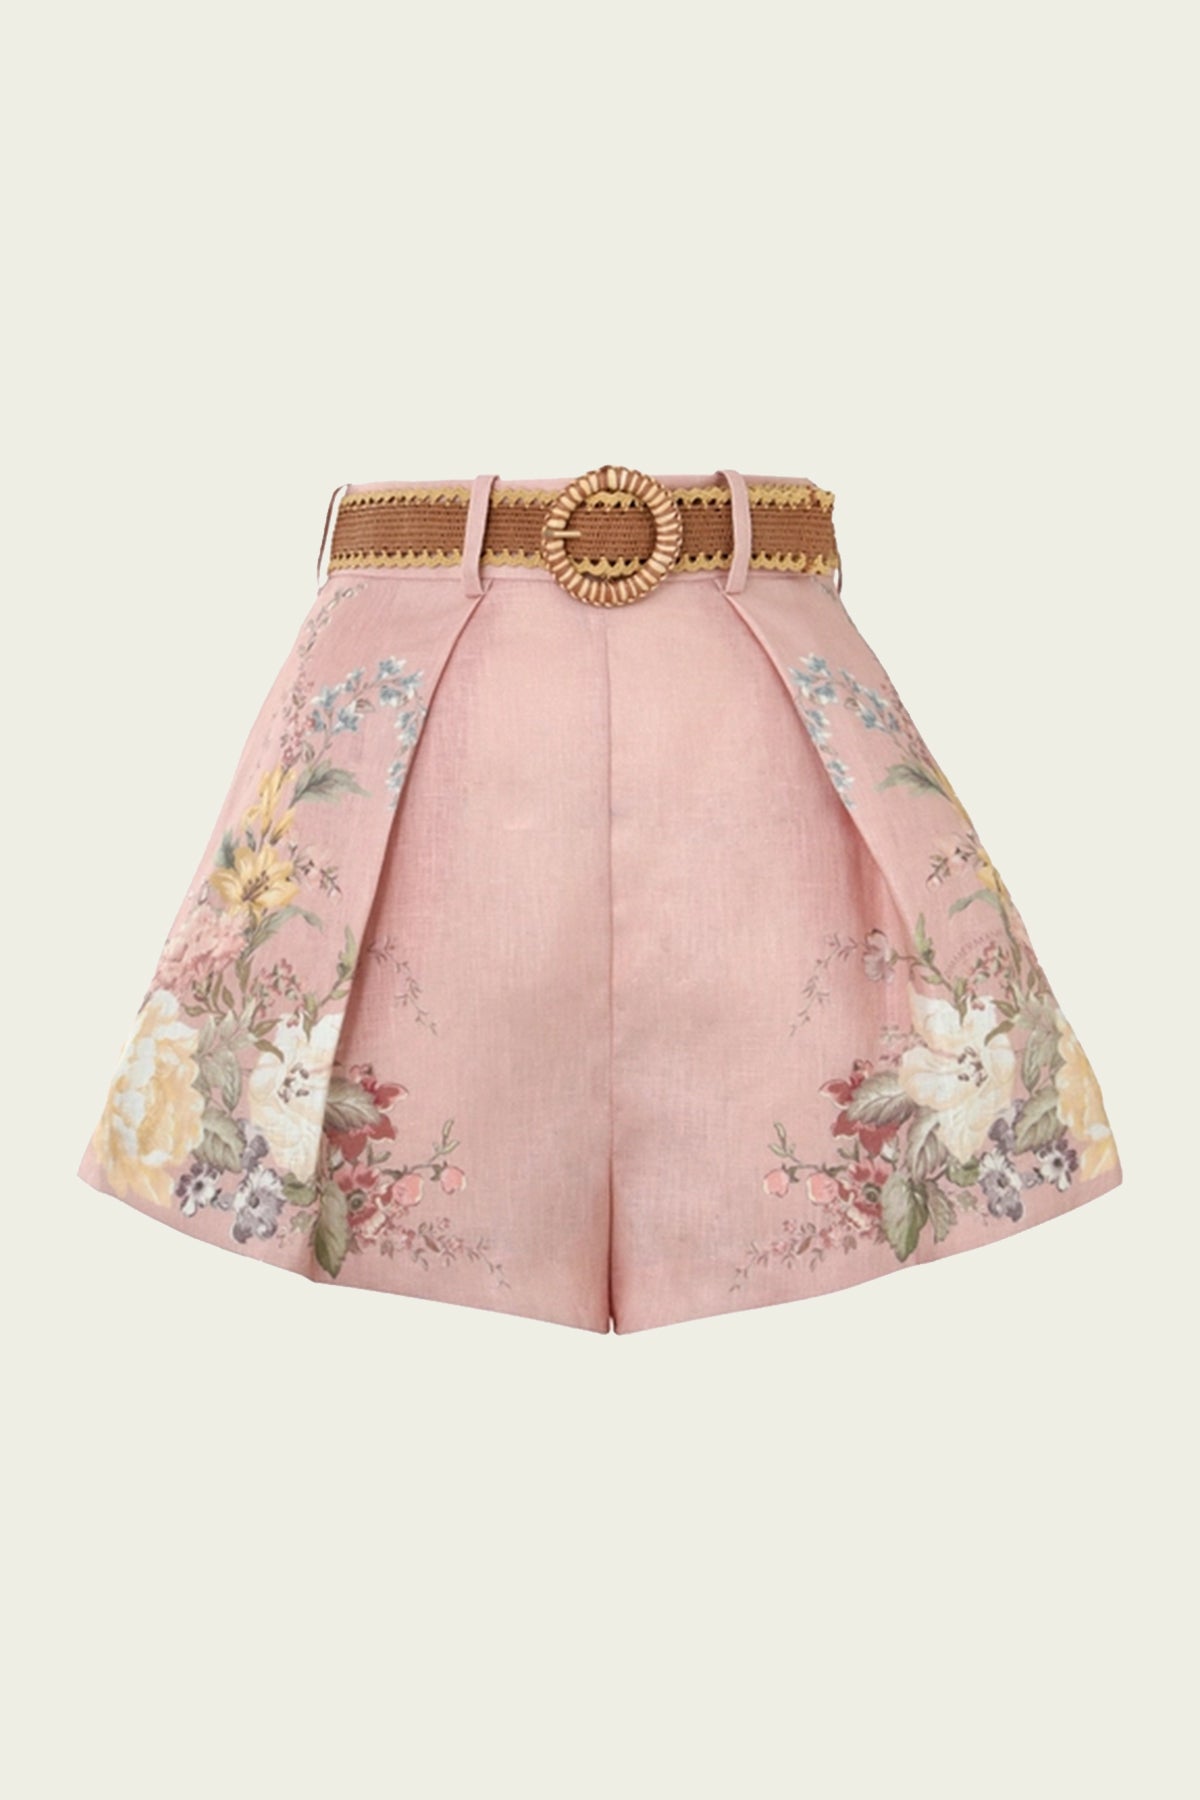 Waverly Tucked Short in Pink Floral - shop - olivia.com